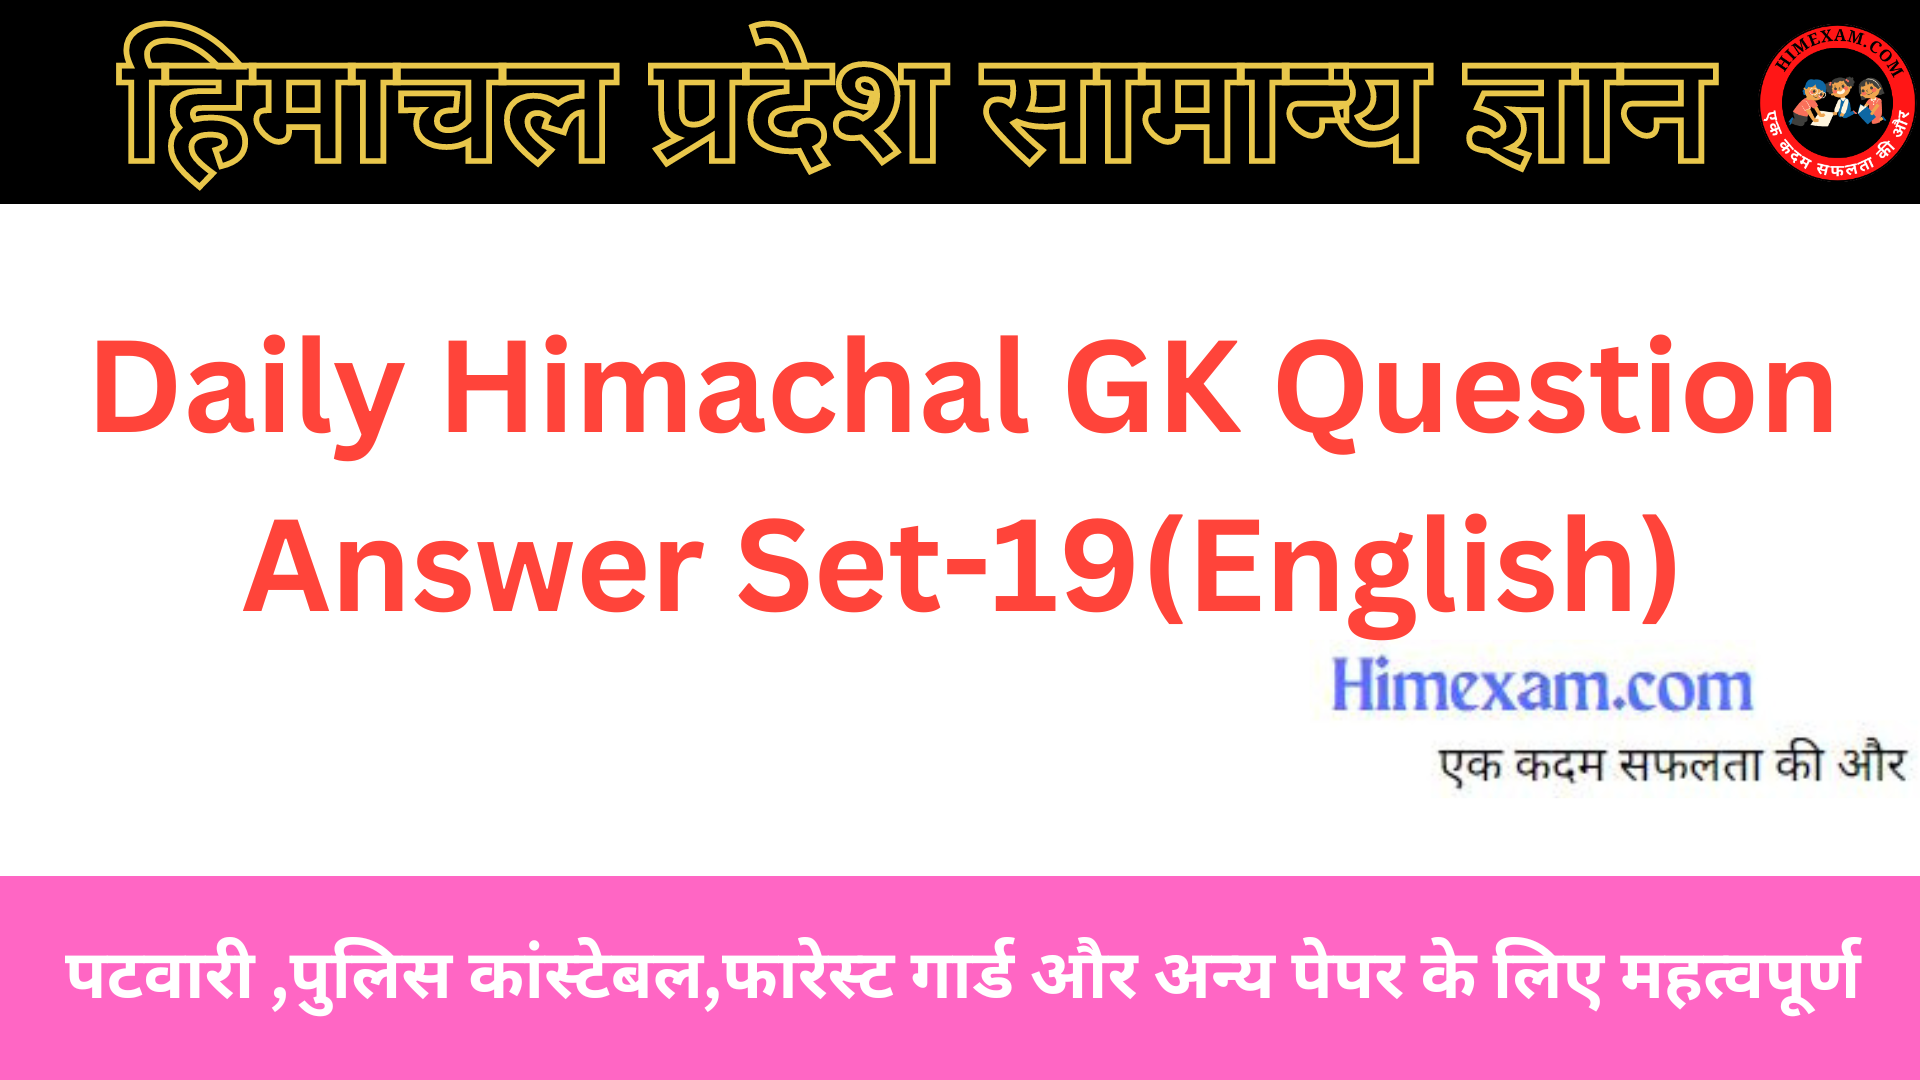 Daily HP GK Online Quiz Set-19 (English)